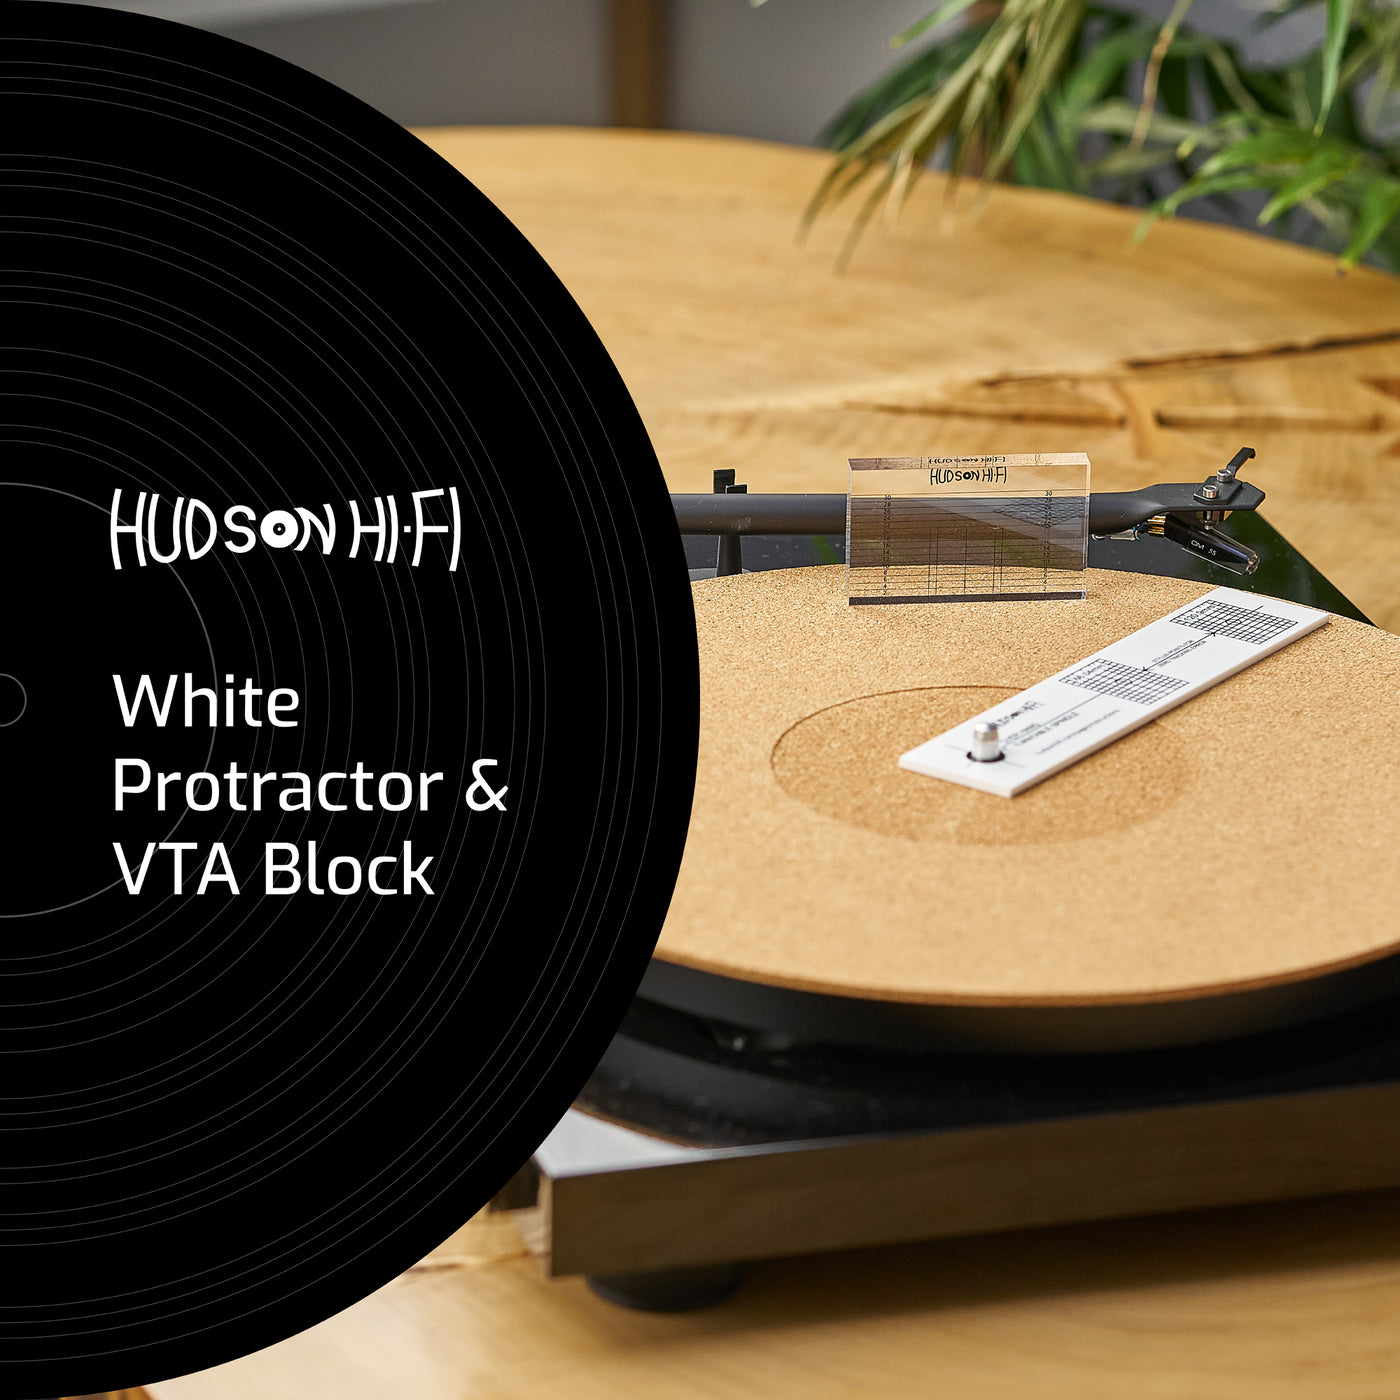 Hudson Hi-Fi VTA Ruler + Protractor Bundle